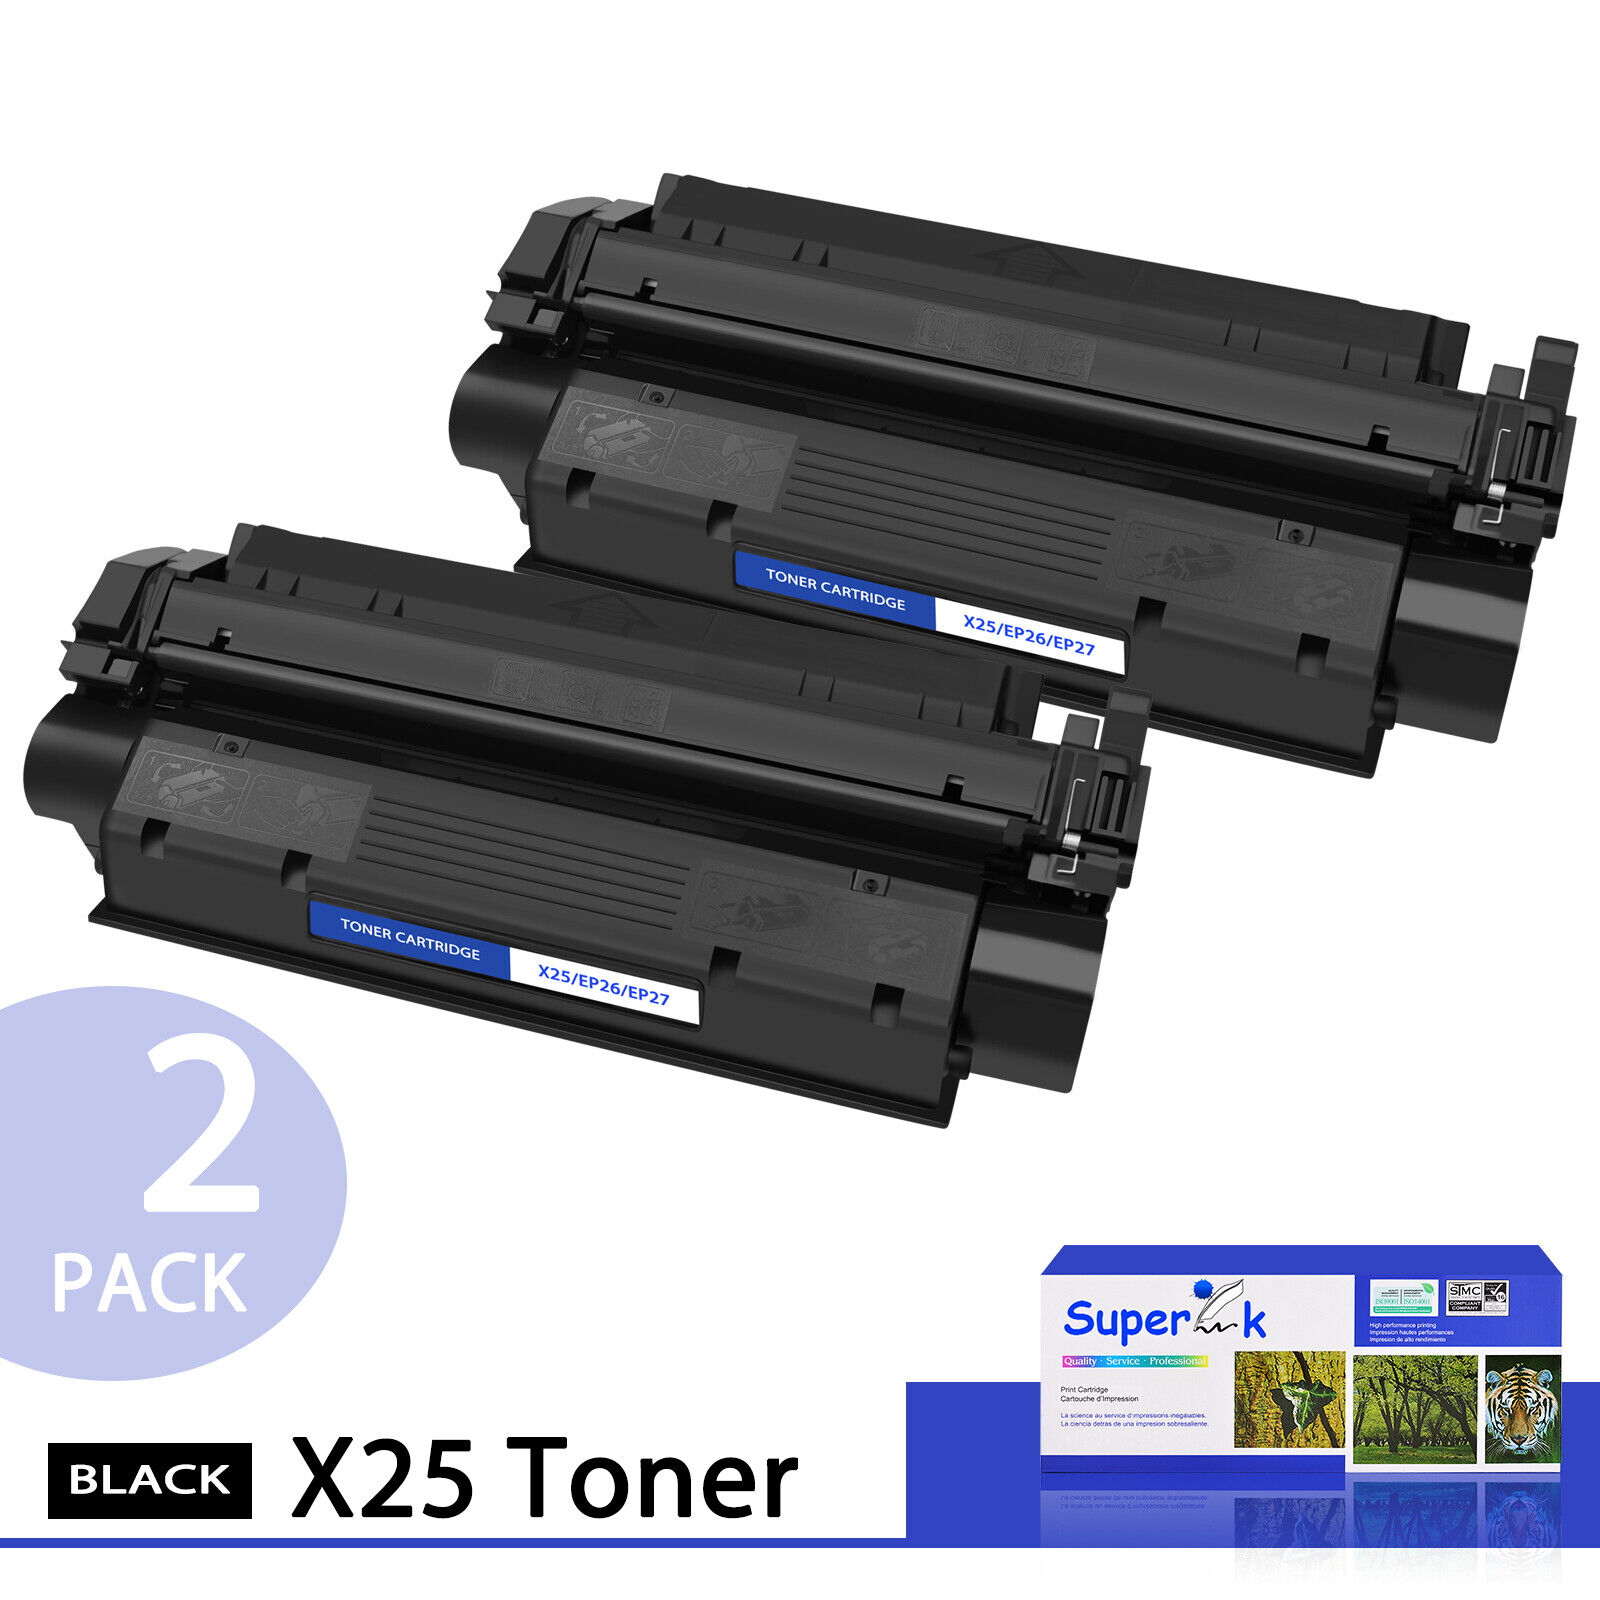 2PK Toner Cartridge X25 For Canon ImageCLASS MF3110 MF3220 MF3240 MF5530 5570